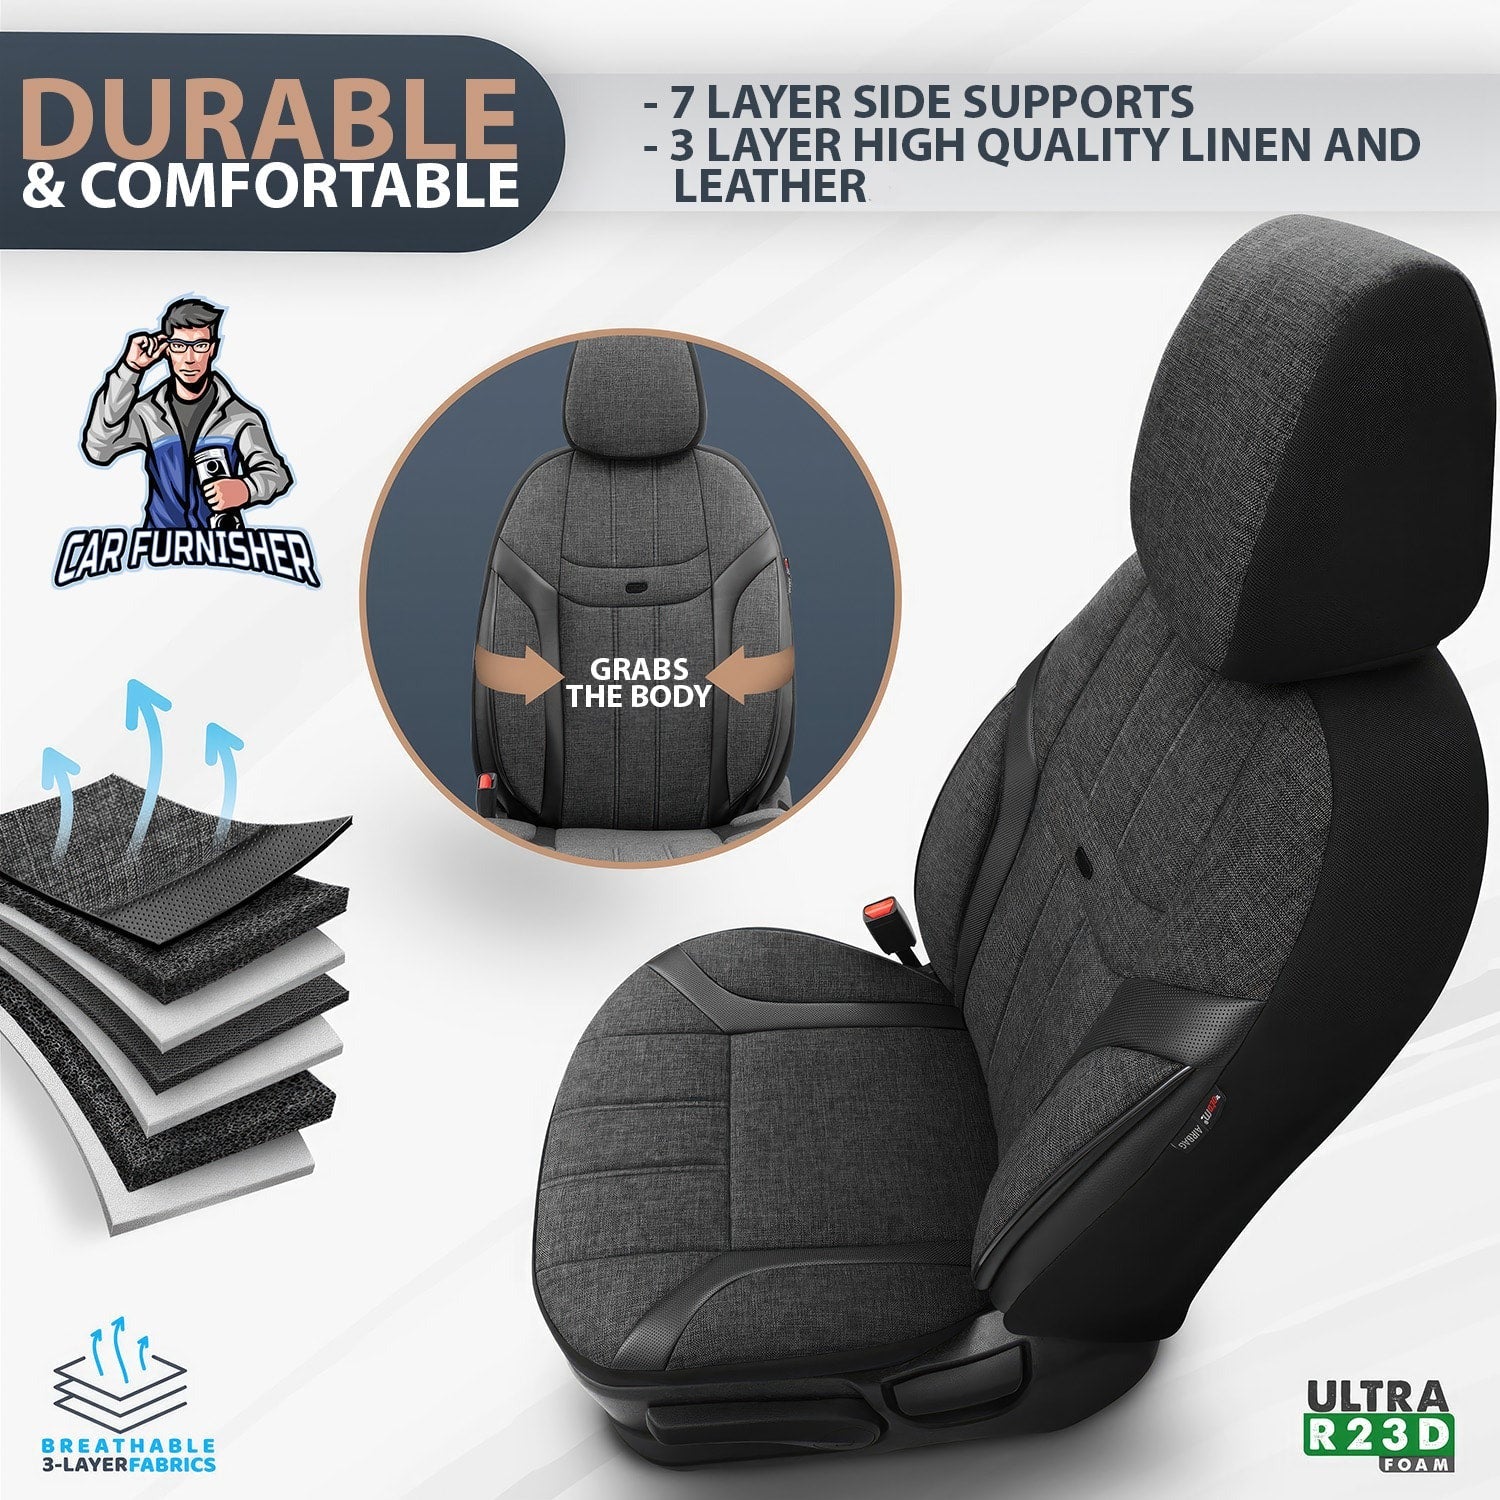 Car Seat Cover Set - Swan Design Black 5 Seats + Headrests (Full Set) Leather & Linen Fabric